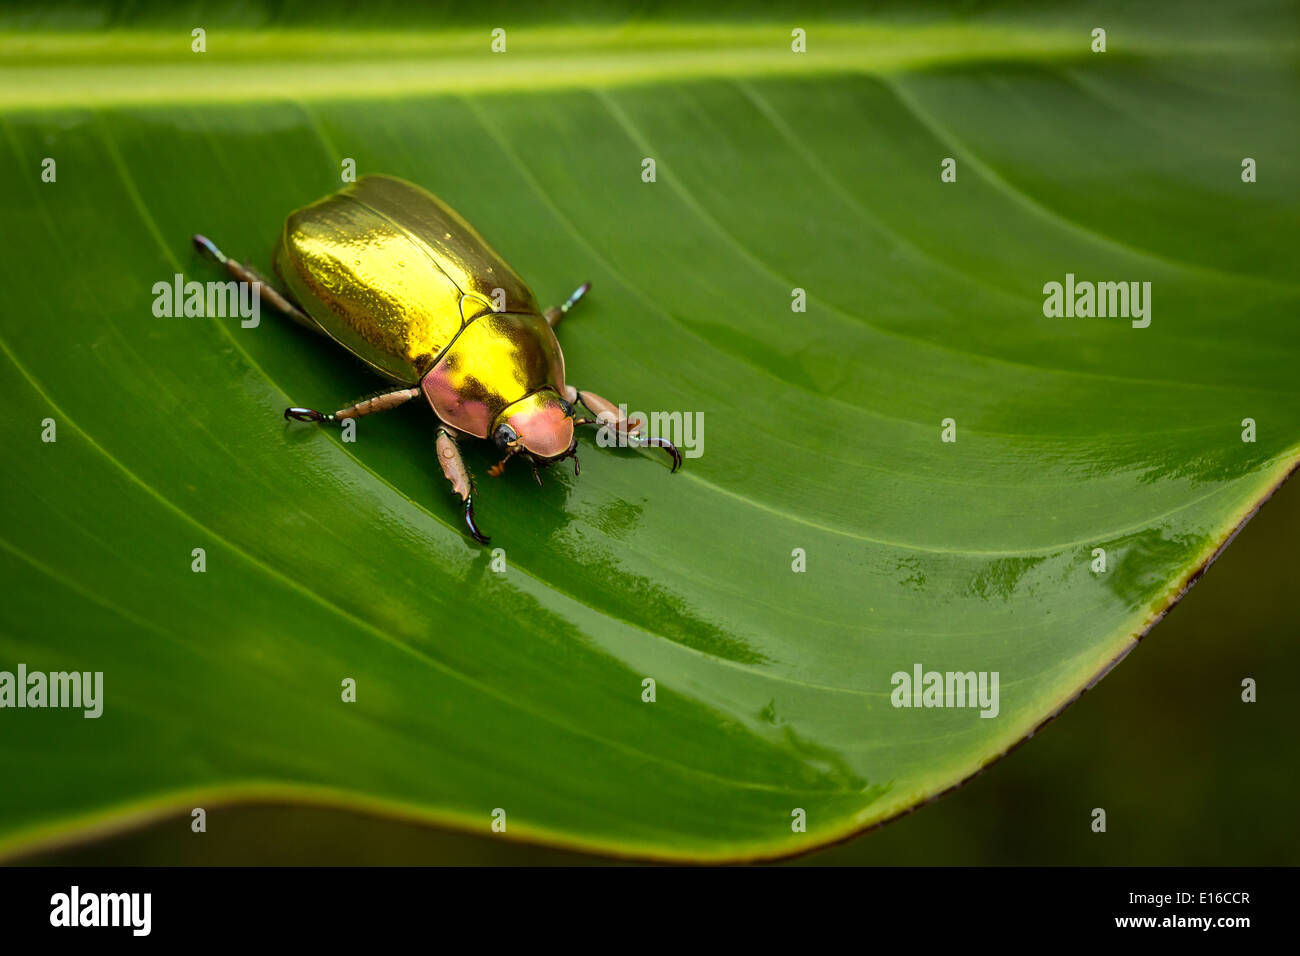 Golden beetle Stock Photo